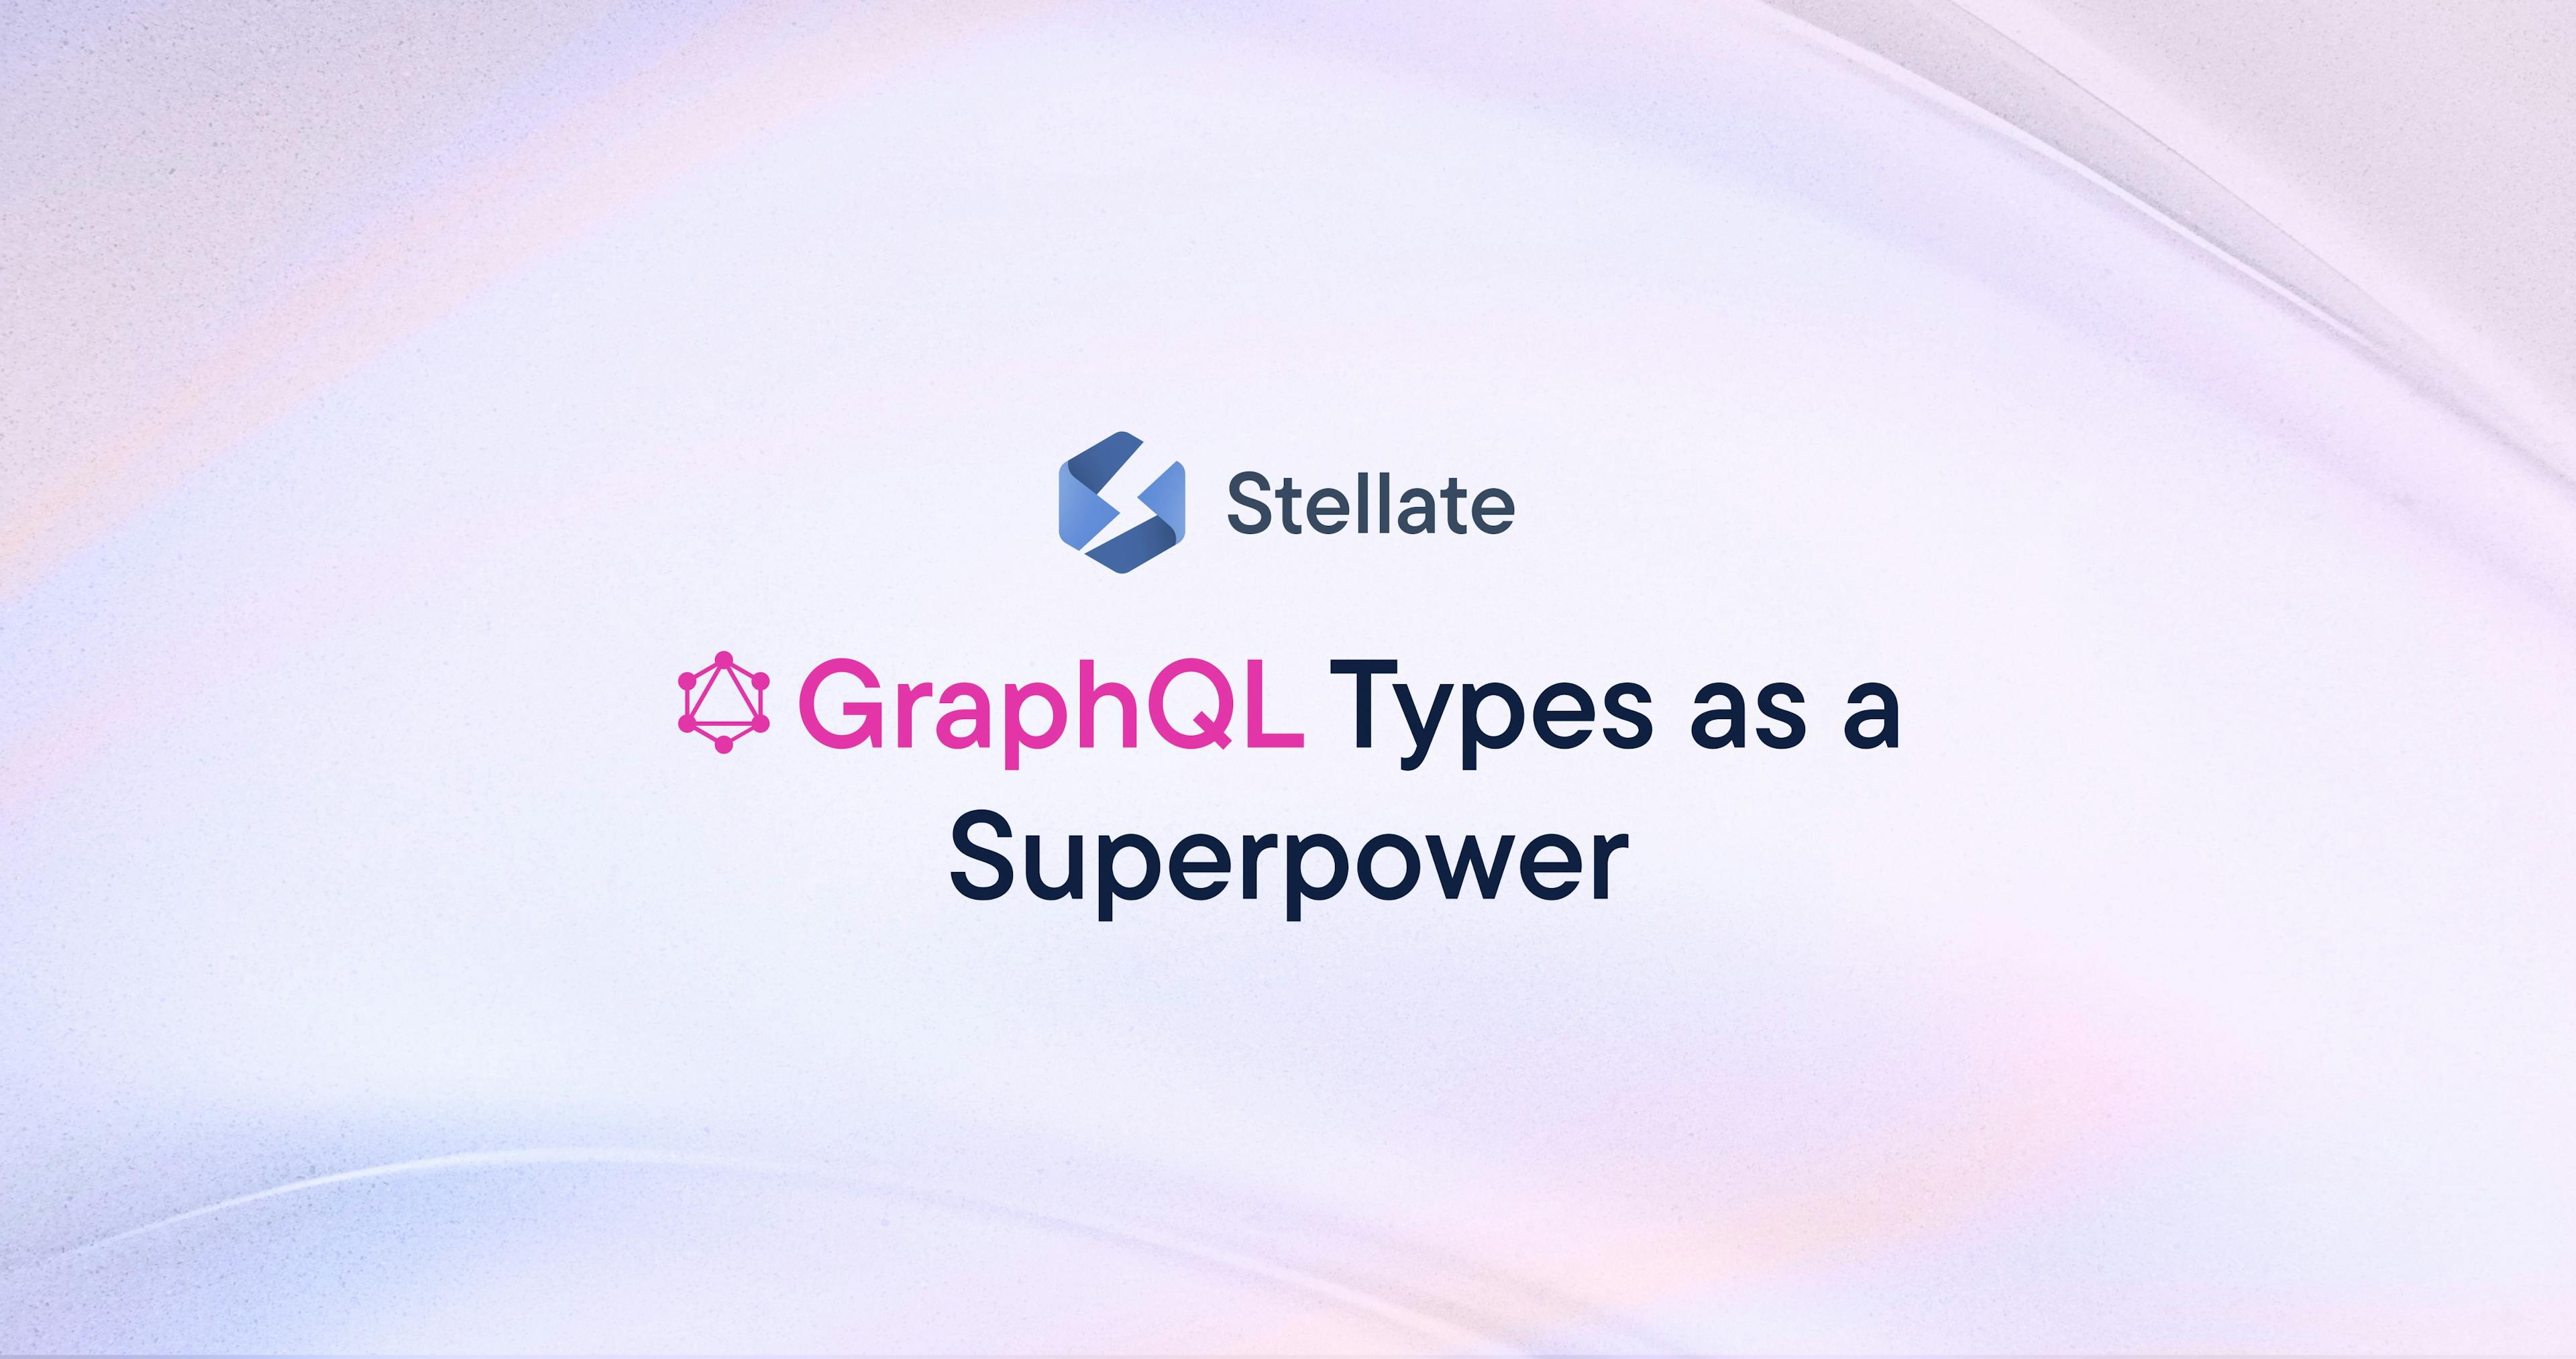 GraphQL Types as a Superpower